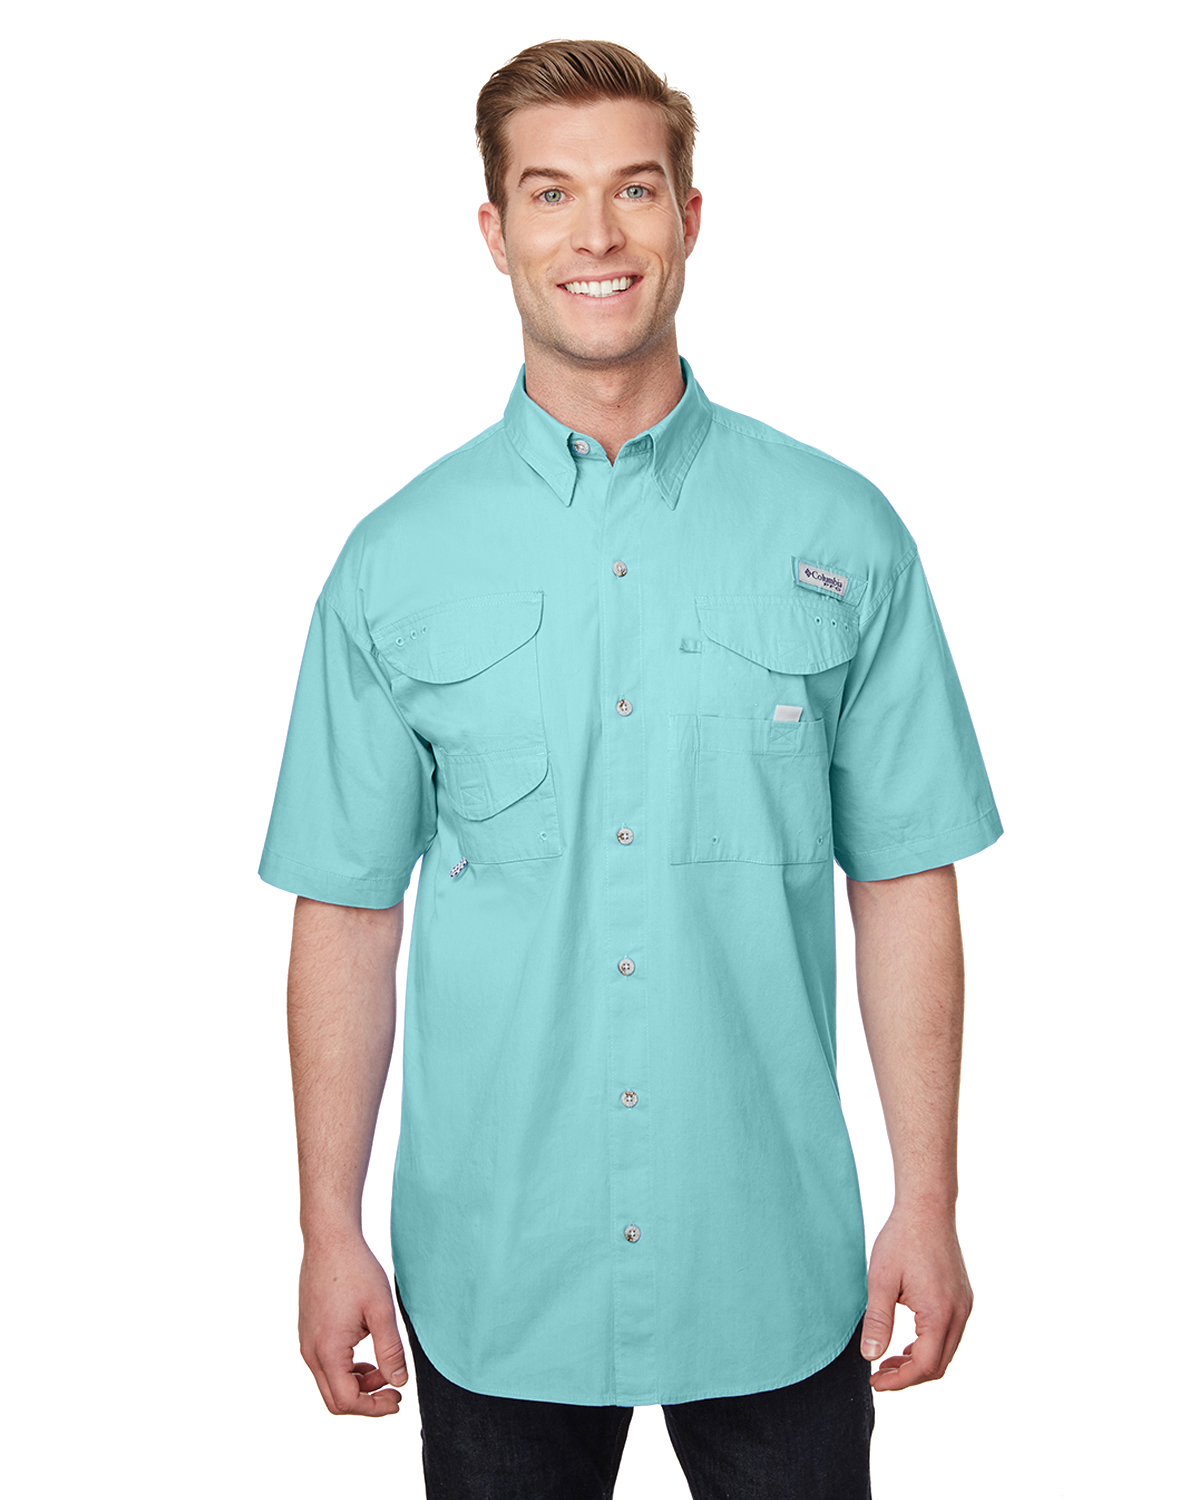 https://images.shirtspace.com/fullsize/jV%2BOQjblJt0QXIUm1se40Q%3D%3D/121319/5458-columbia-7130-men-s-bonehead-short-sleeve-shirt-front-gulf-stream.jpg